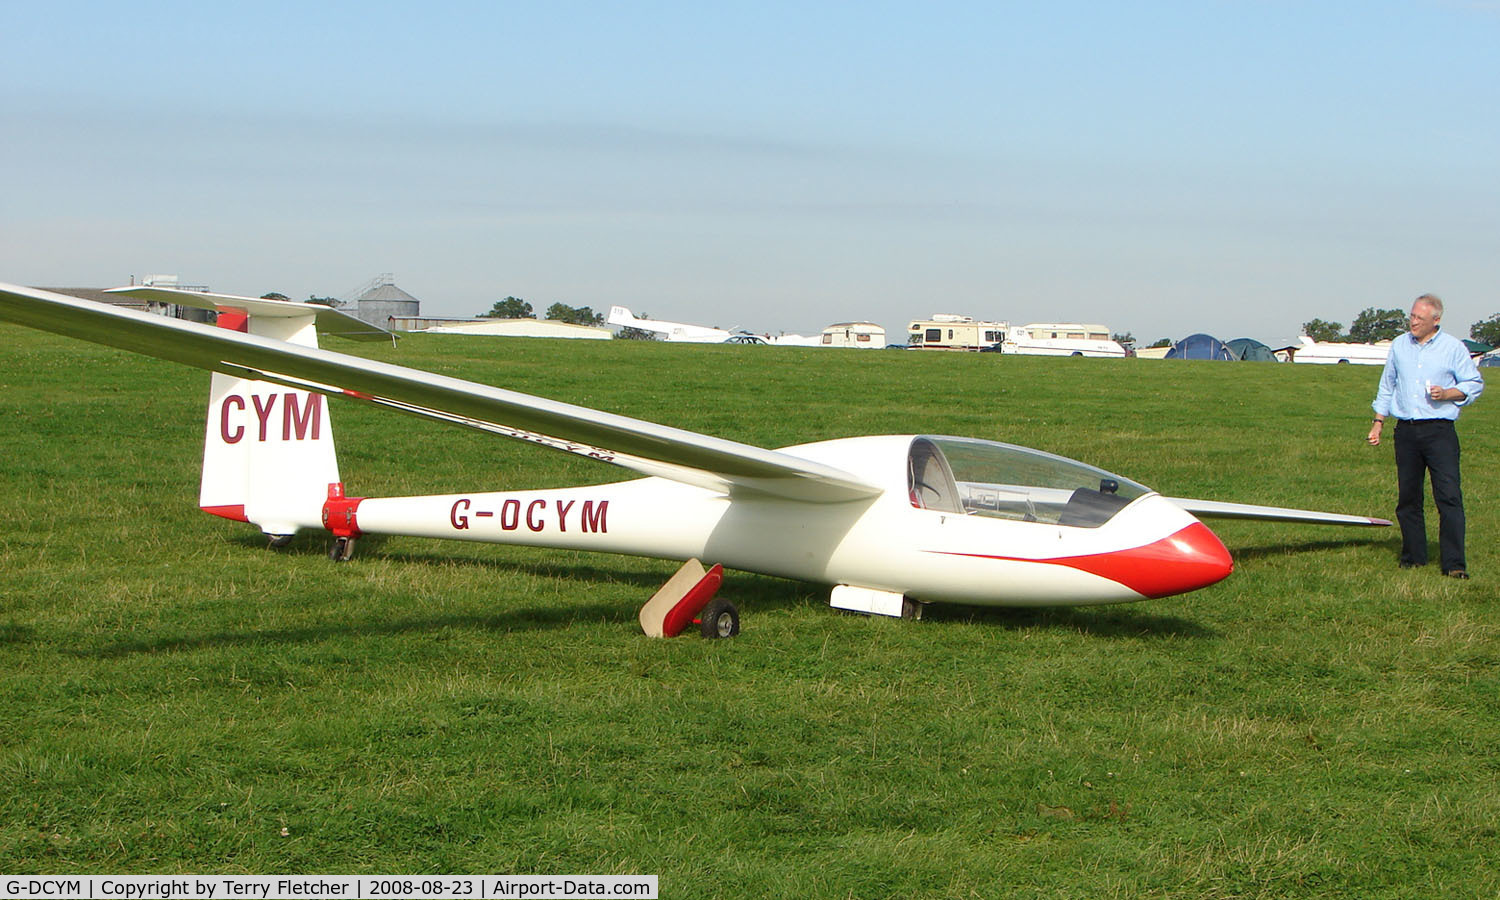 G-DCYM, 1970 Schempp-Hirth Standard Cirrus C/N 48, Competitor in the Midland Regional Gliding Championship at Husband's Bosworth